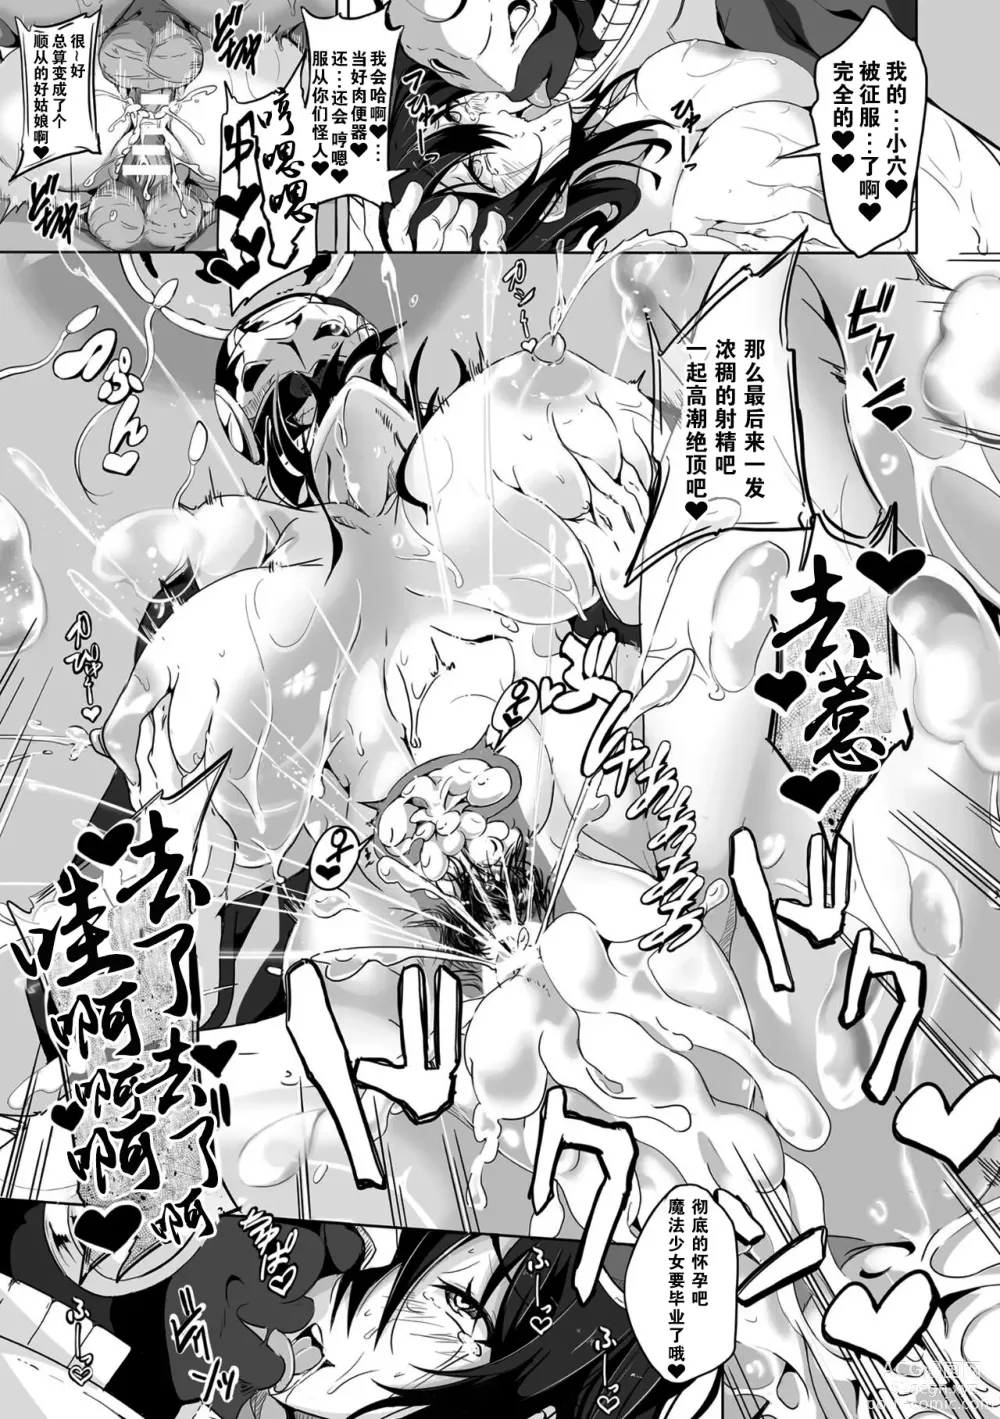 Page 19 of manga Defeating Magical Girl Luna Meltia-Operation to change common sense-